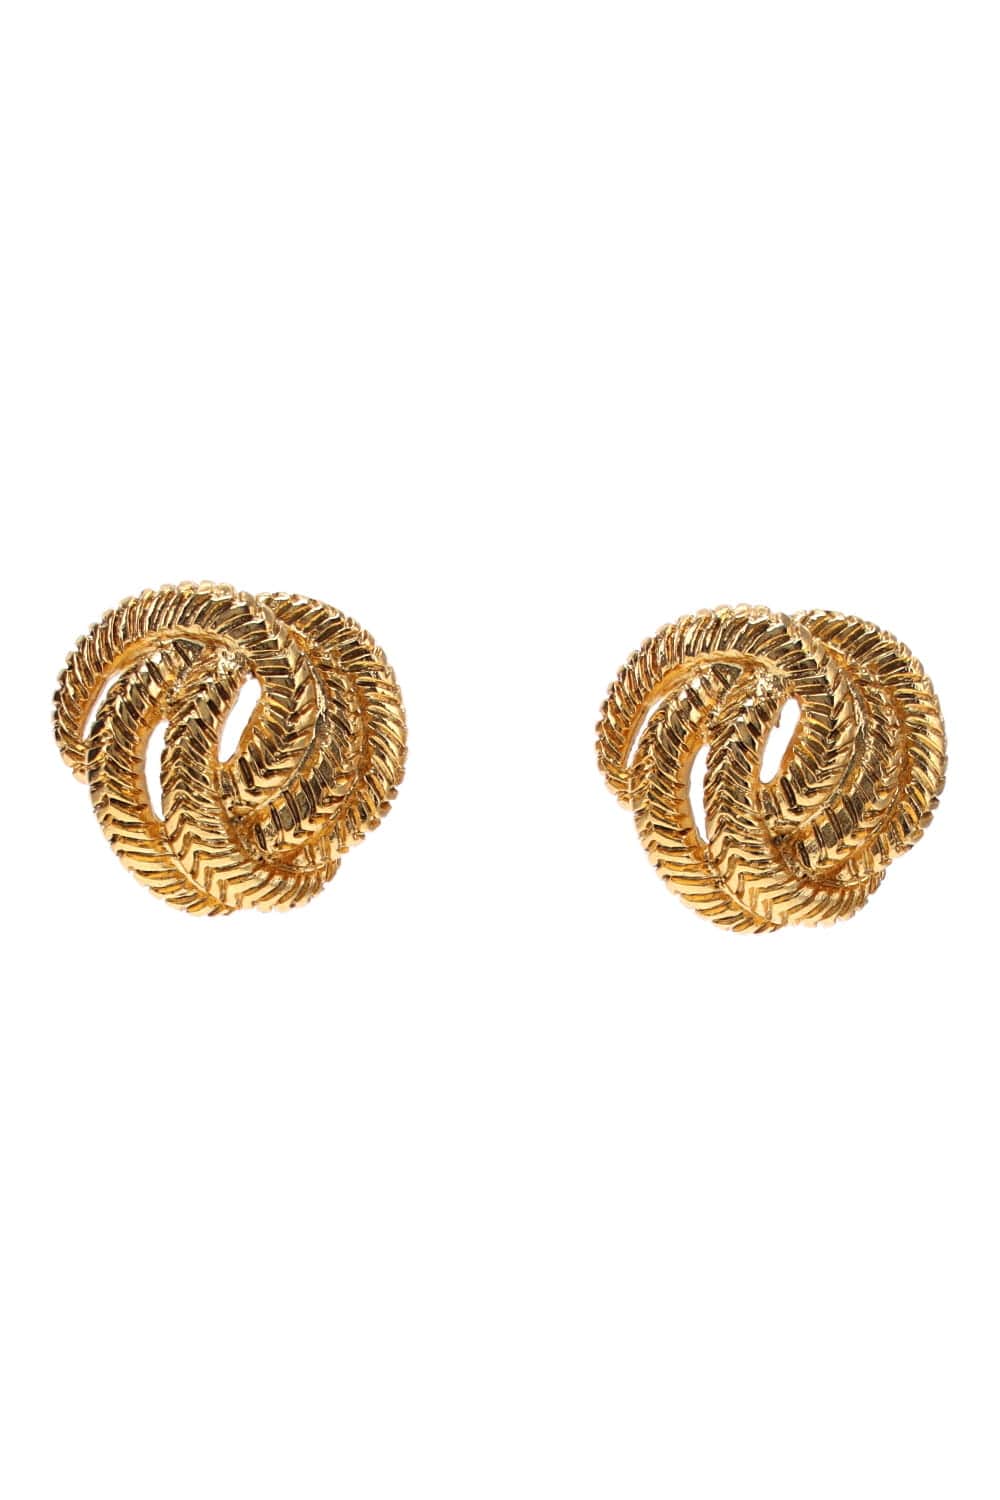 Jennifer Behr Elaina Stud Earrings 111RA46-gold GOLD